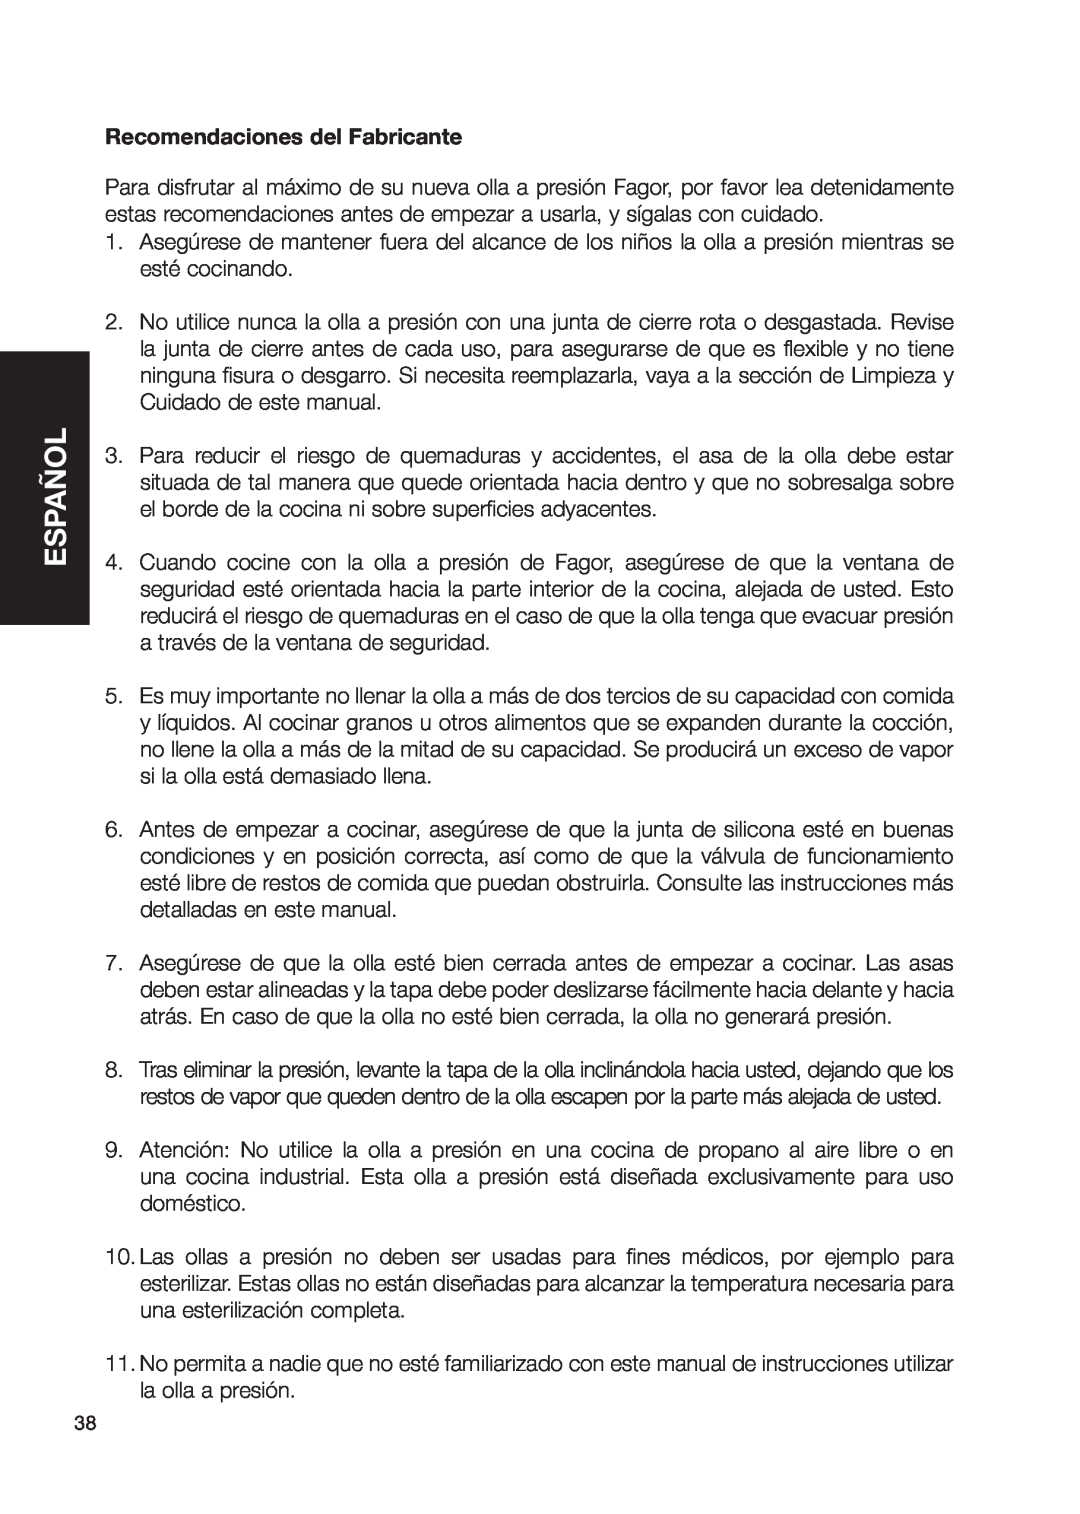 Fagor America Fagor Rapida Pressure Cooker user manual Español, Recomendaciones del Fabricante 